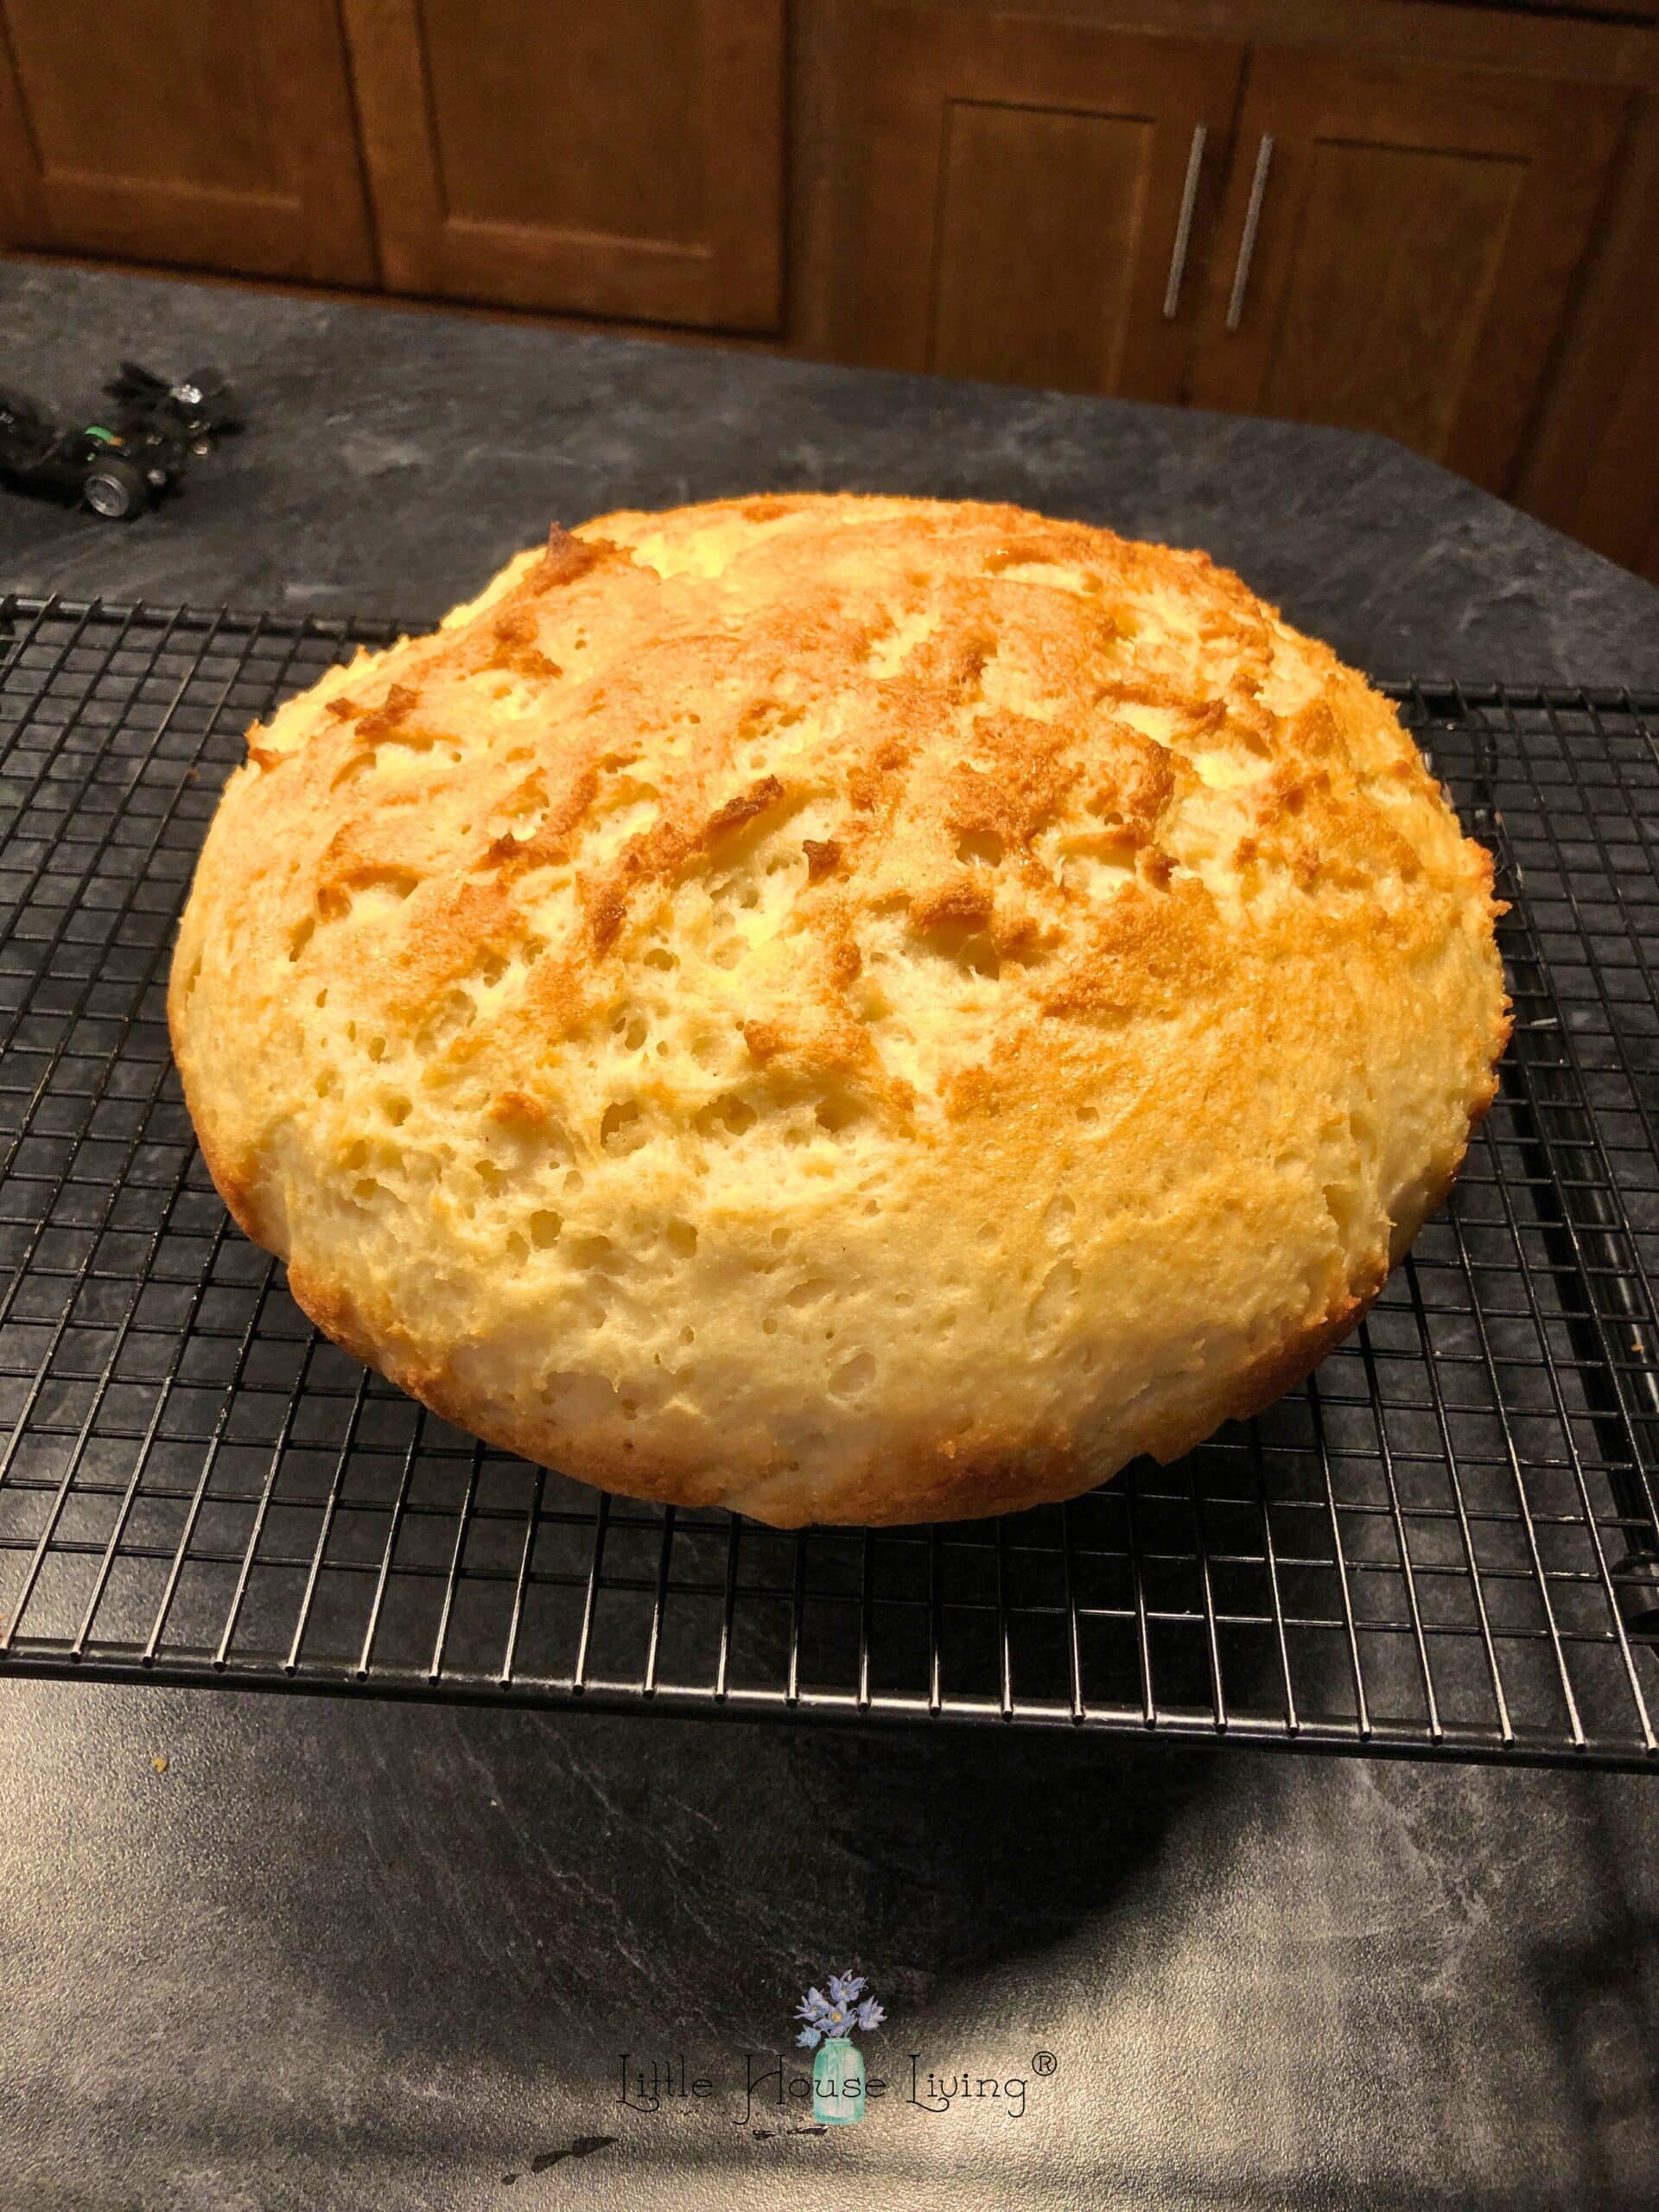 Baked Sourdough Bread